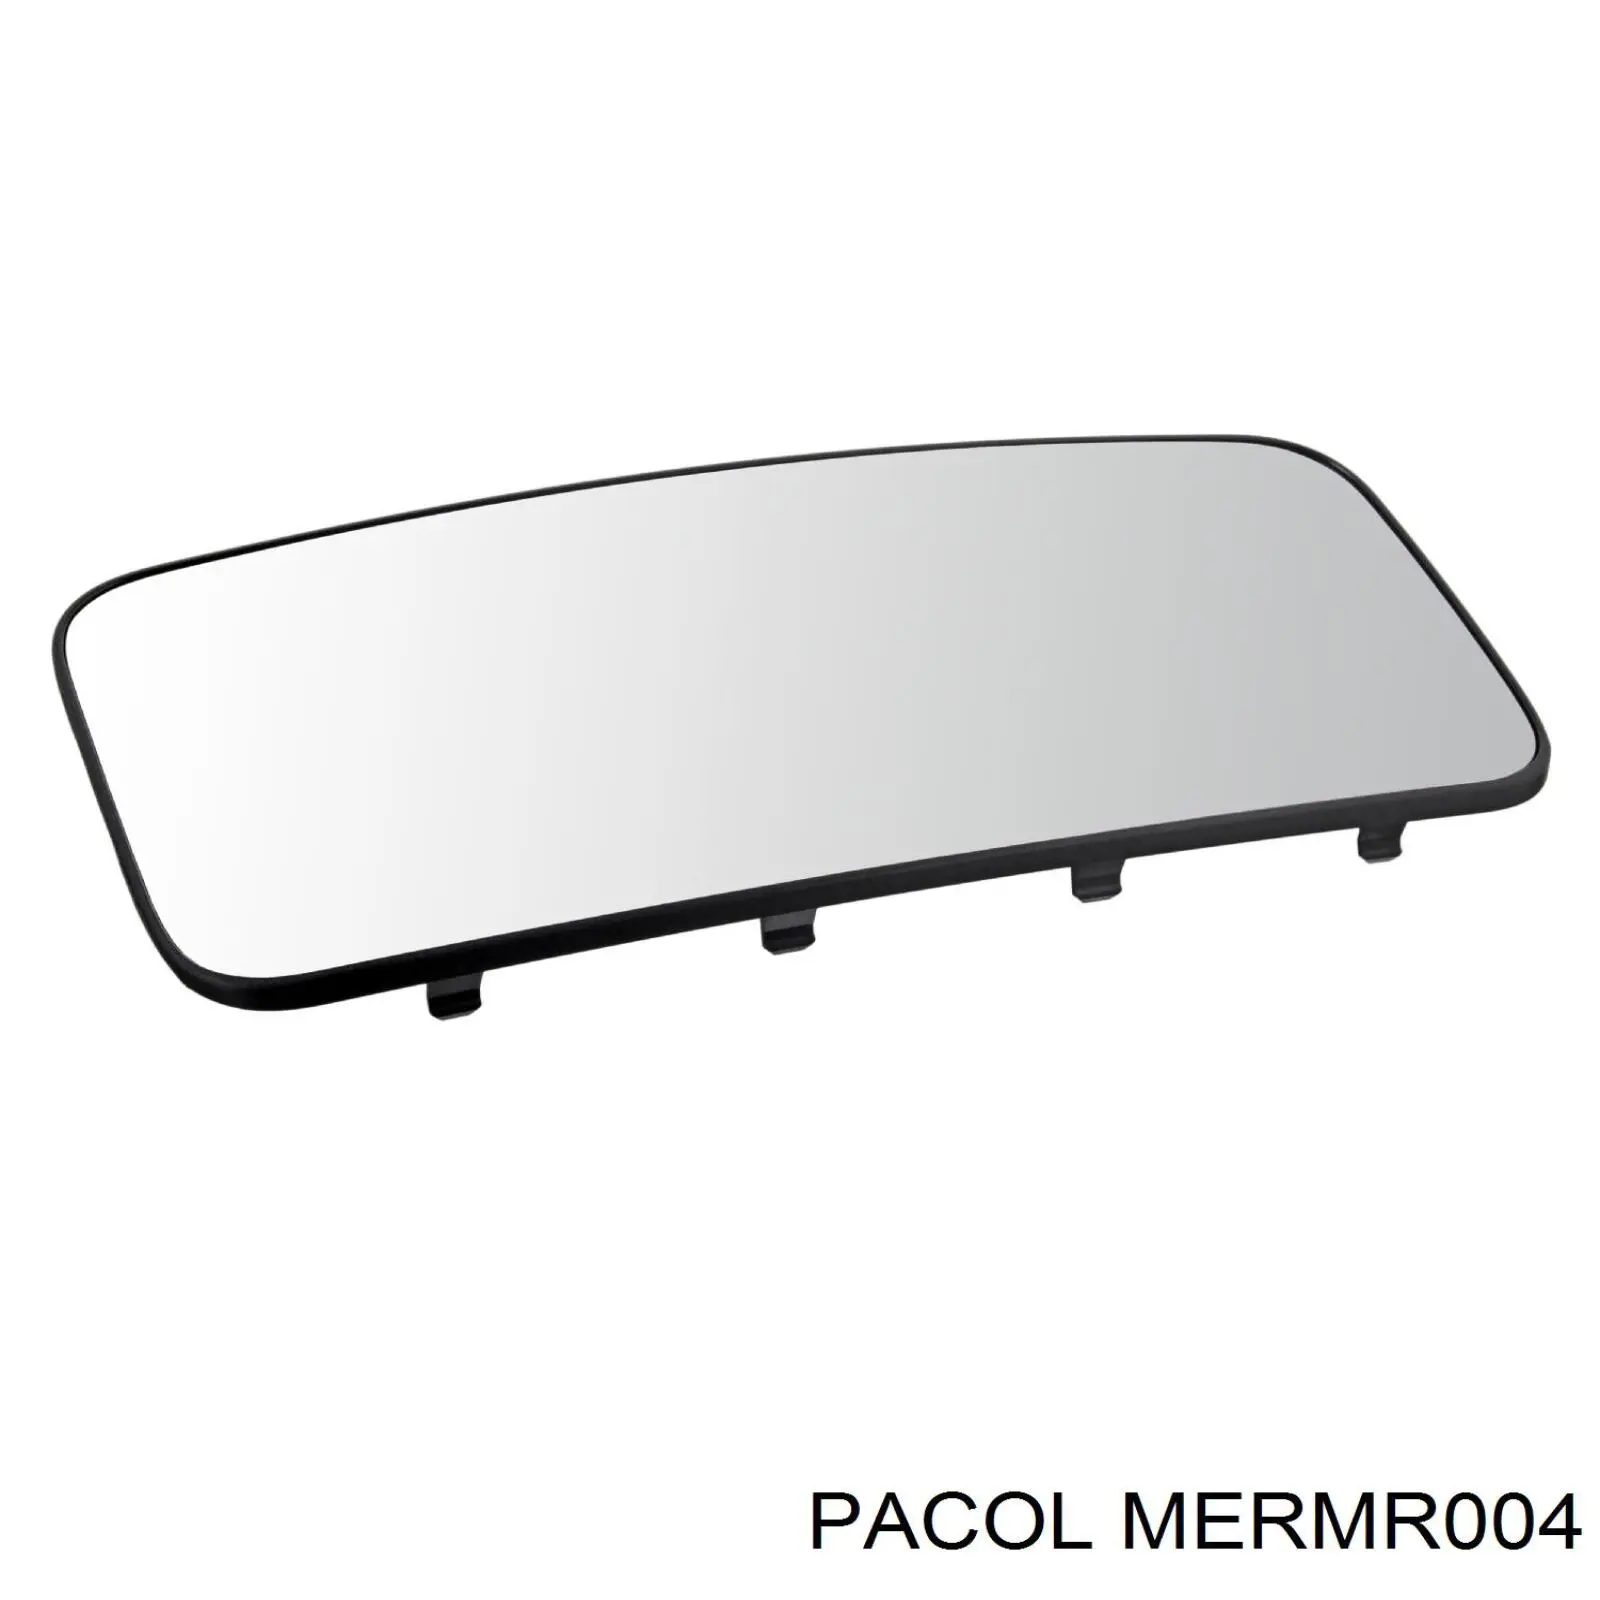 MERMR004 Pacol зеркальный элемент зеркала заднего вида